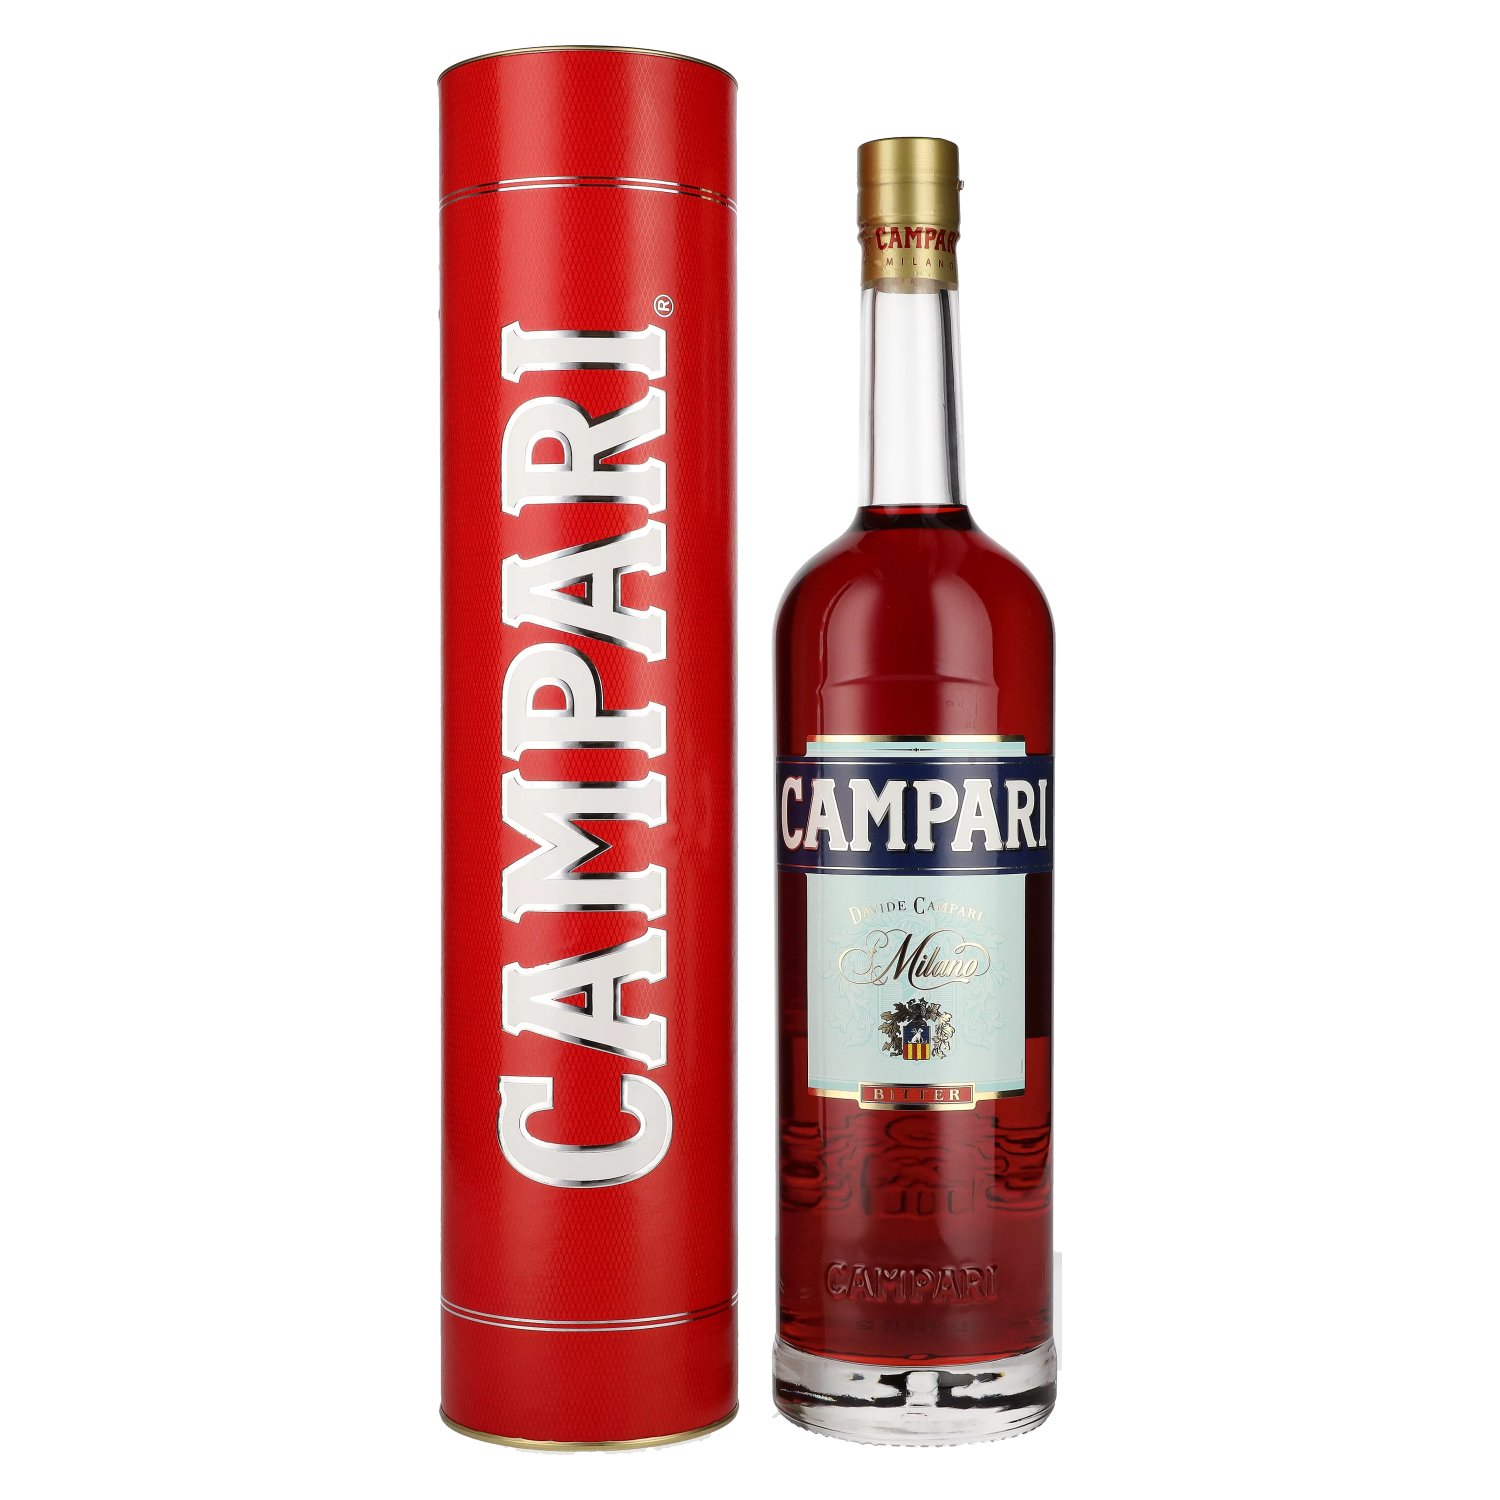 Campari Bitter 25% Giftbox with in Vol. pourer 3l